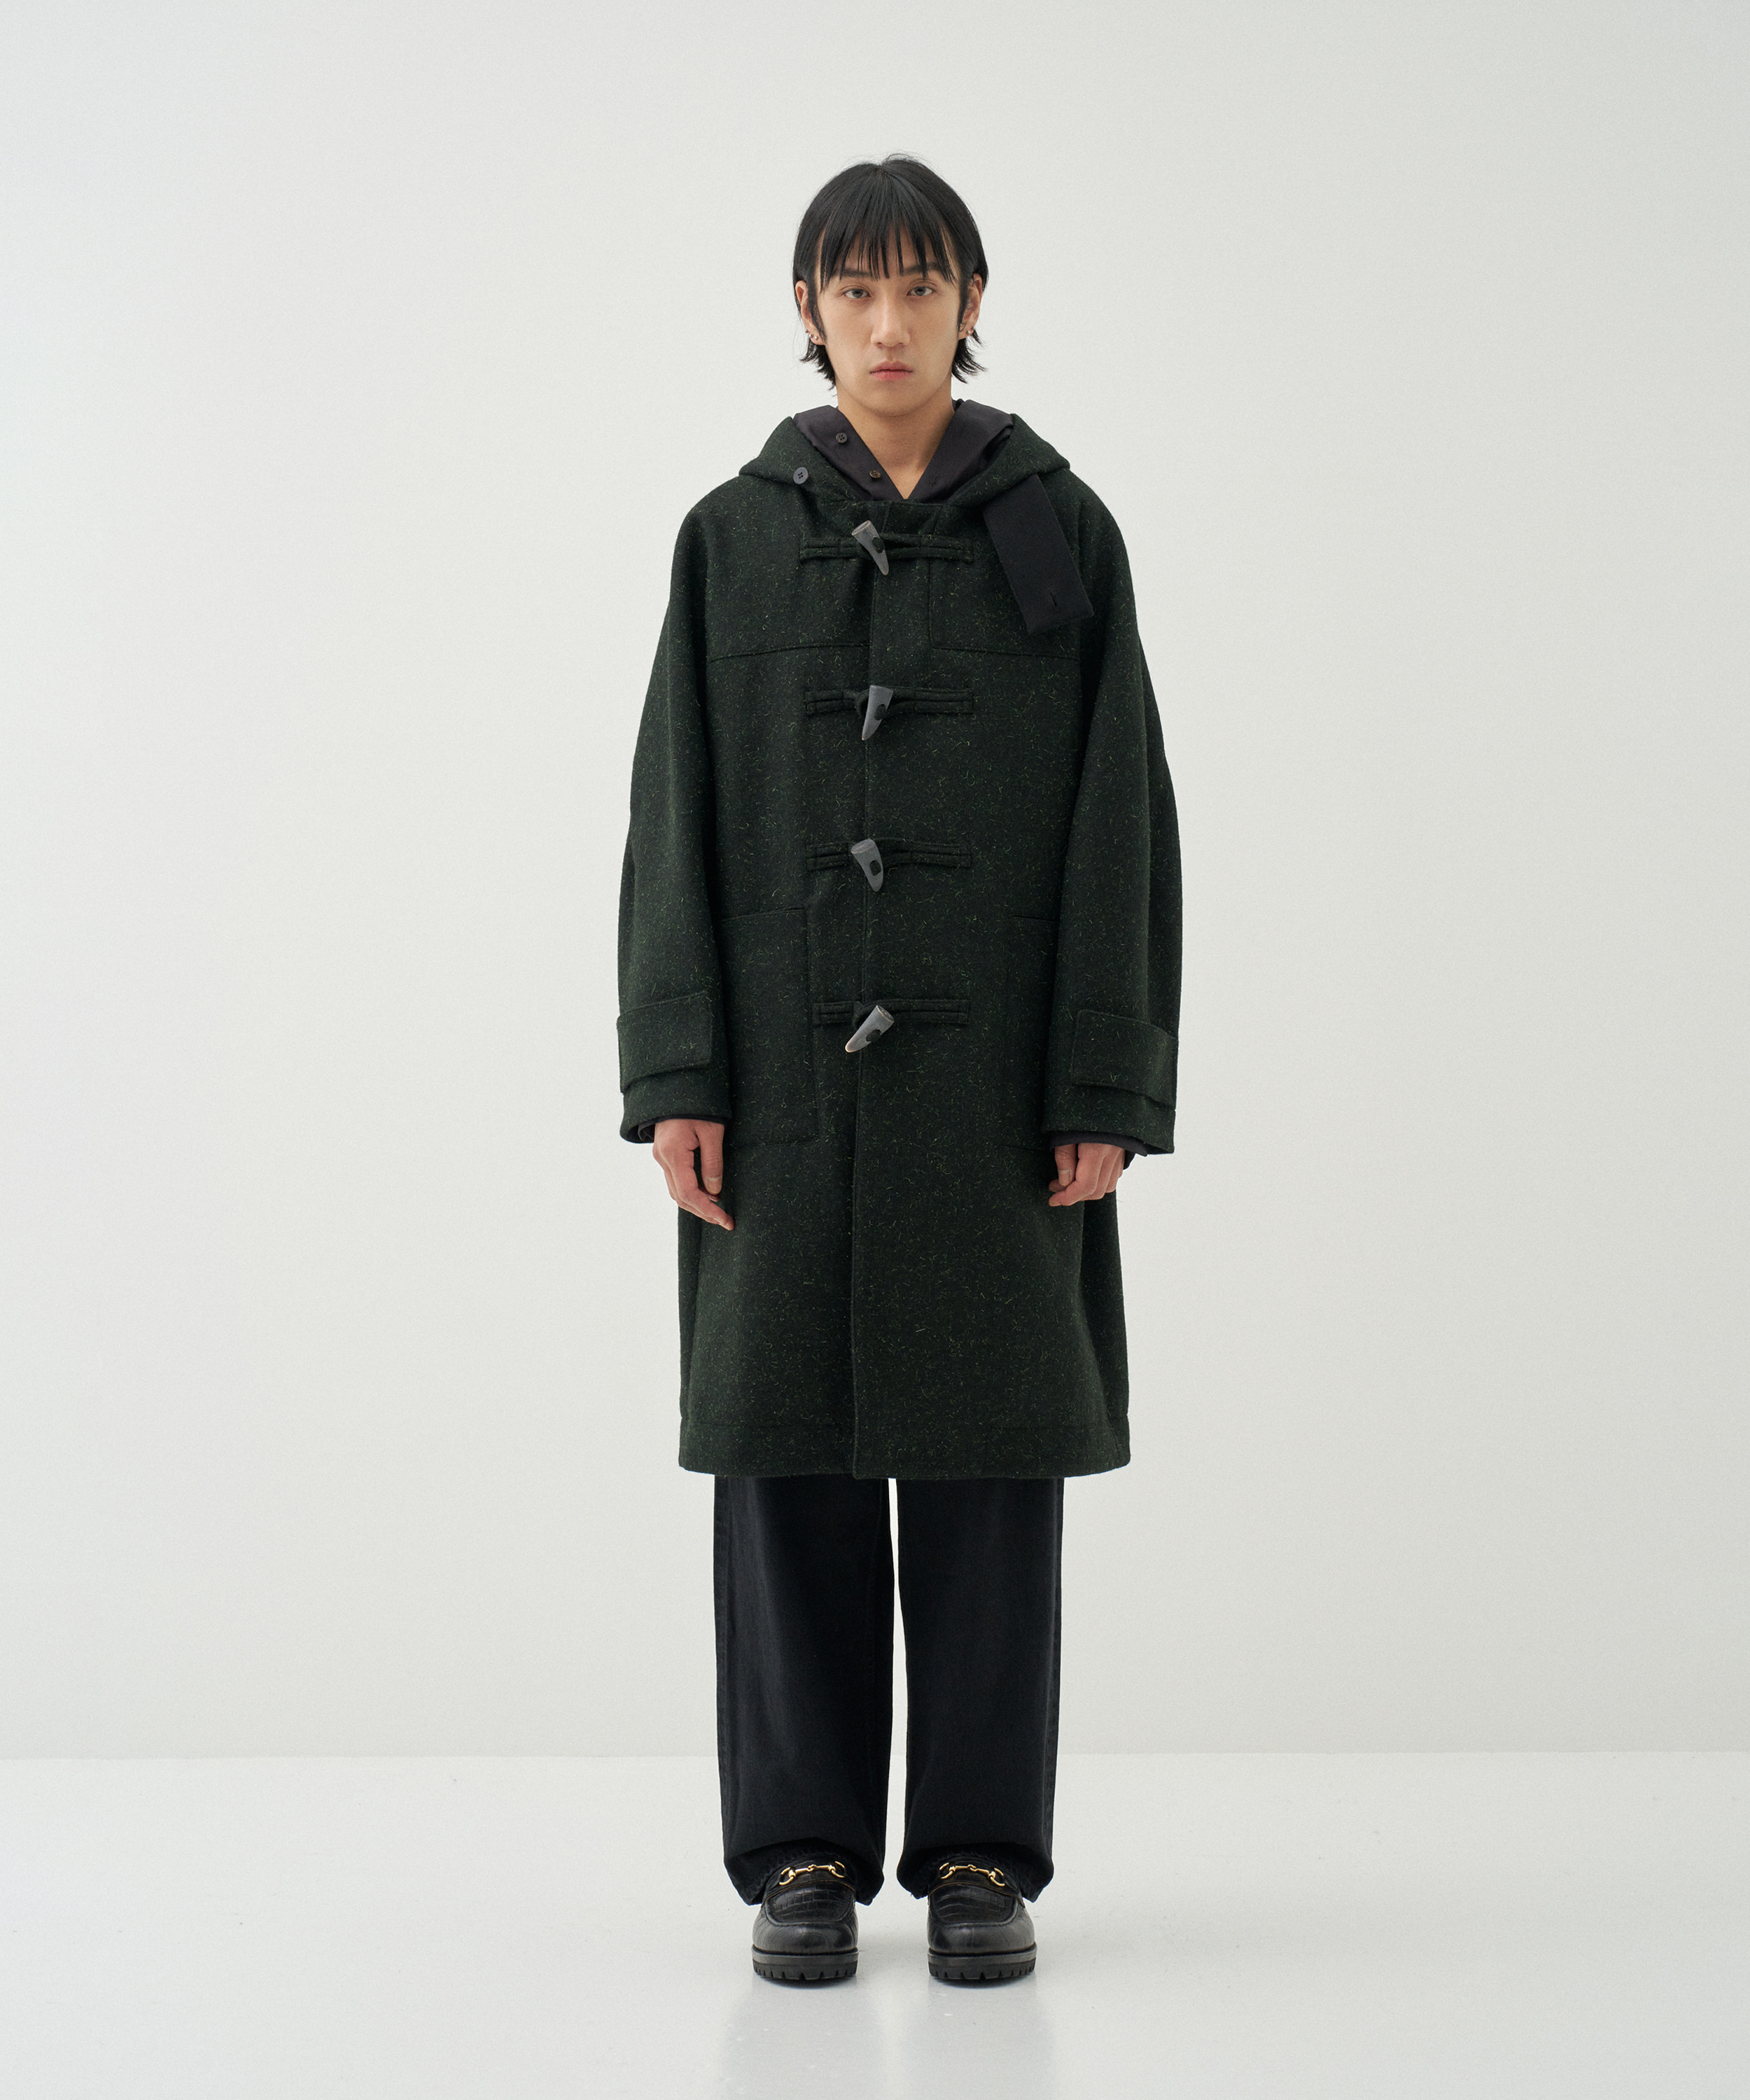 Yoke Sleeve Overcoat With Hood (Forest Green)